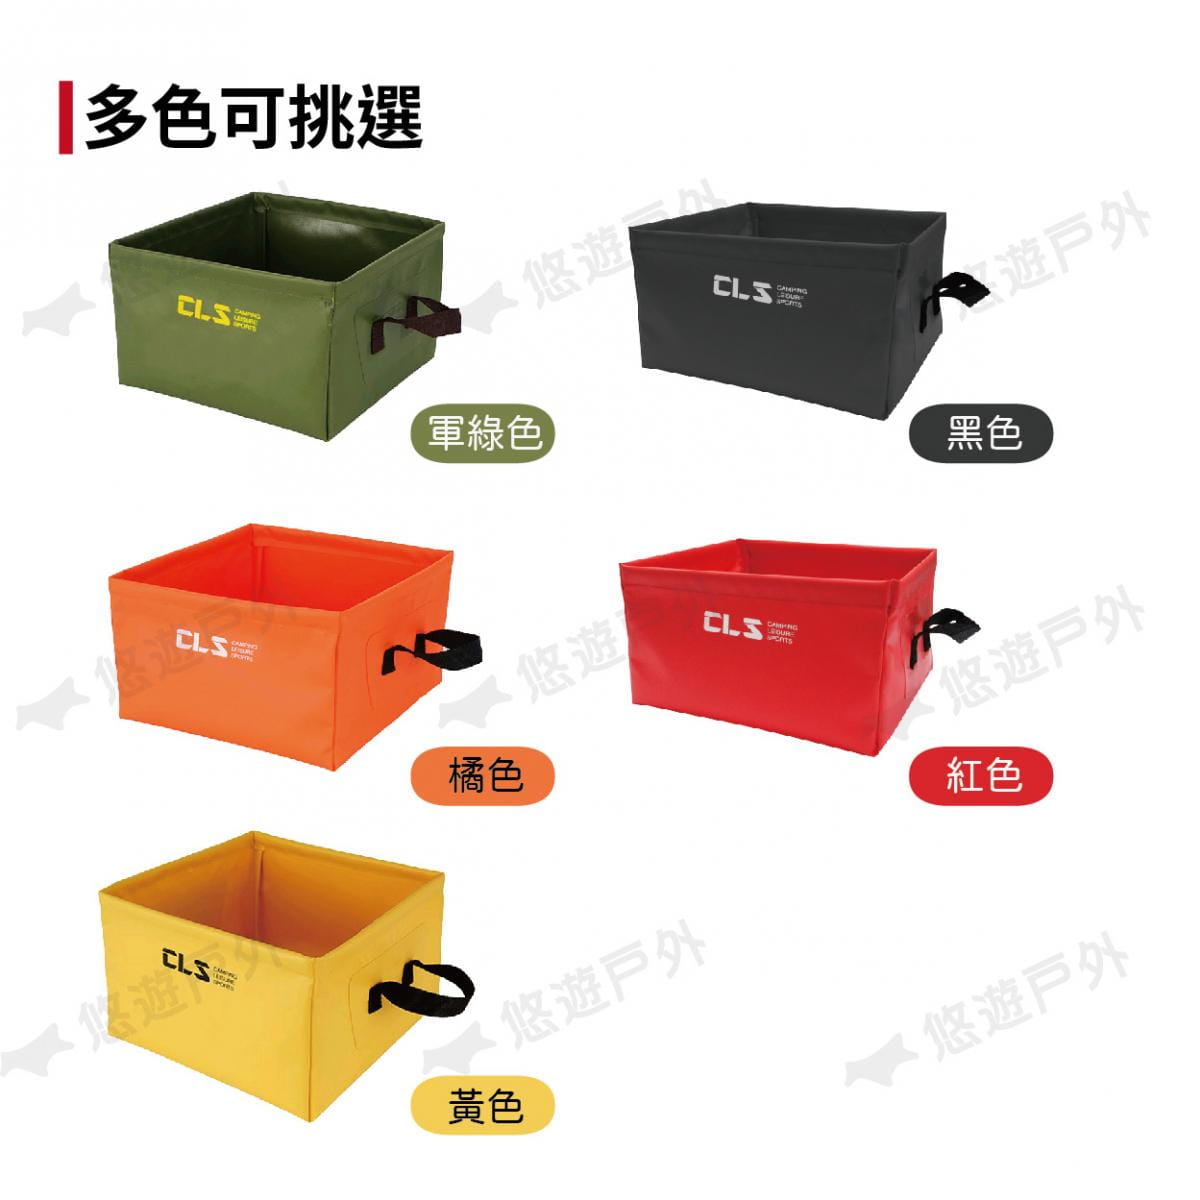 【CLS】韓國 戶外 多功能 方形折疊水桶 儲水盆 水袋 五色可選 13L 應急儲水 環保防水材質 6